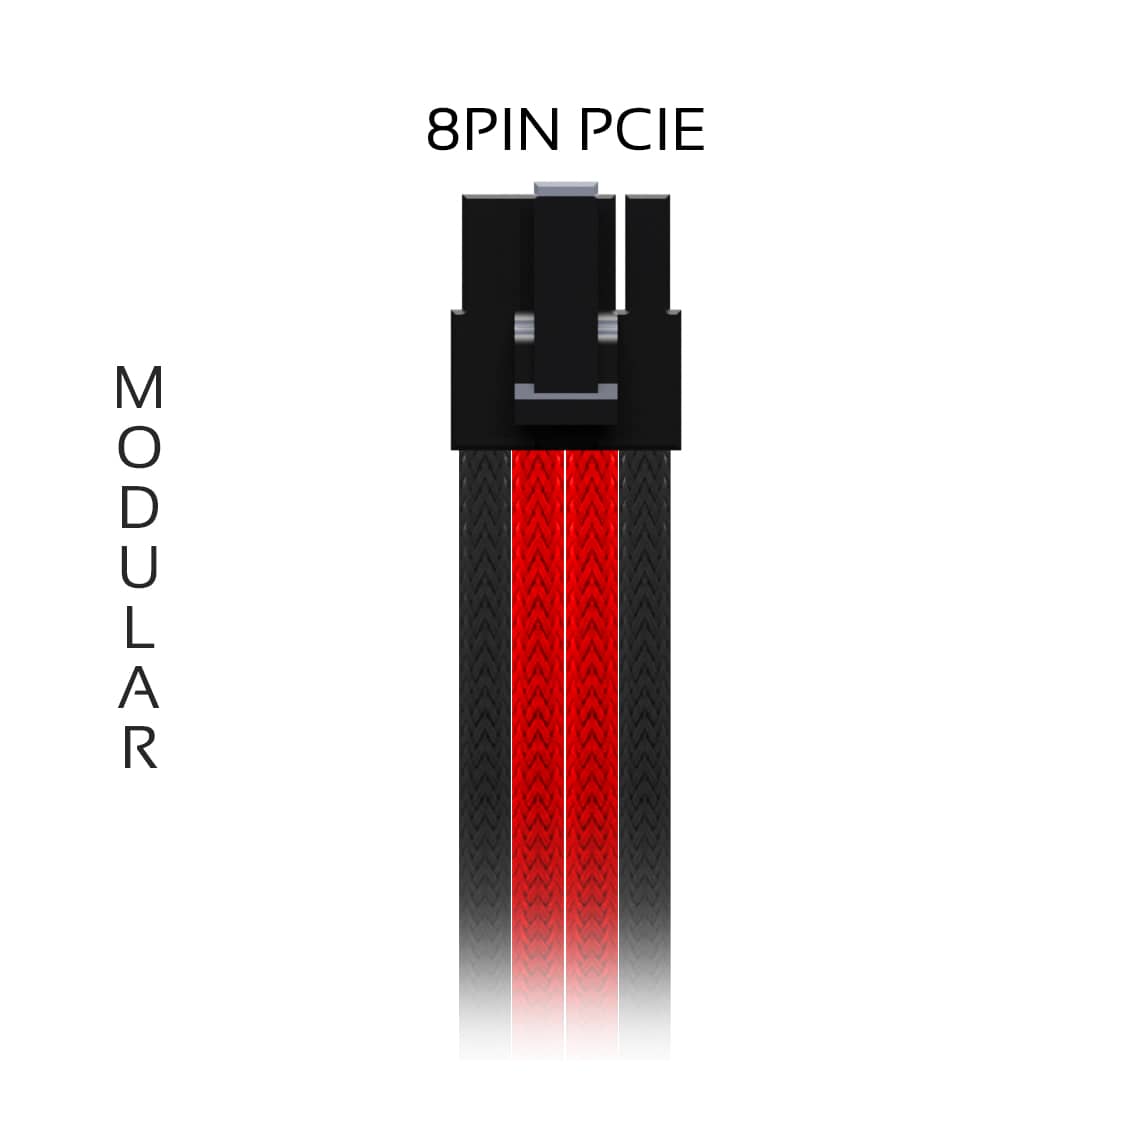 8pin-pcie-modular